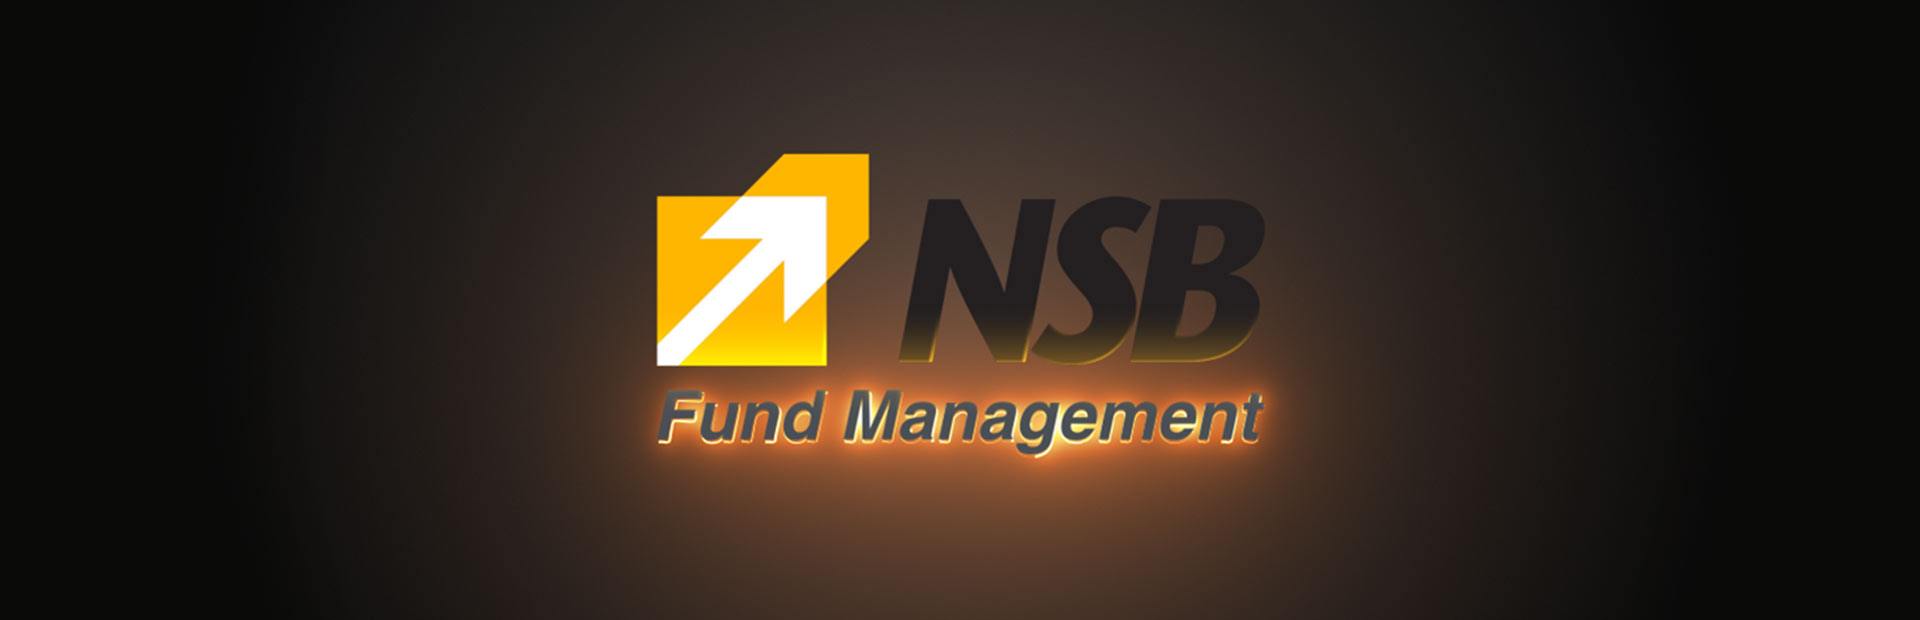 NSB Bank Sri Lanka Banner